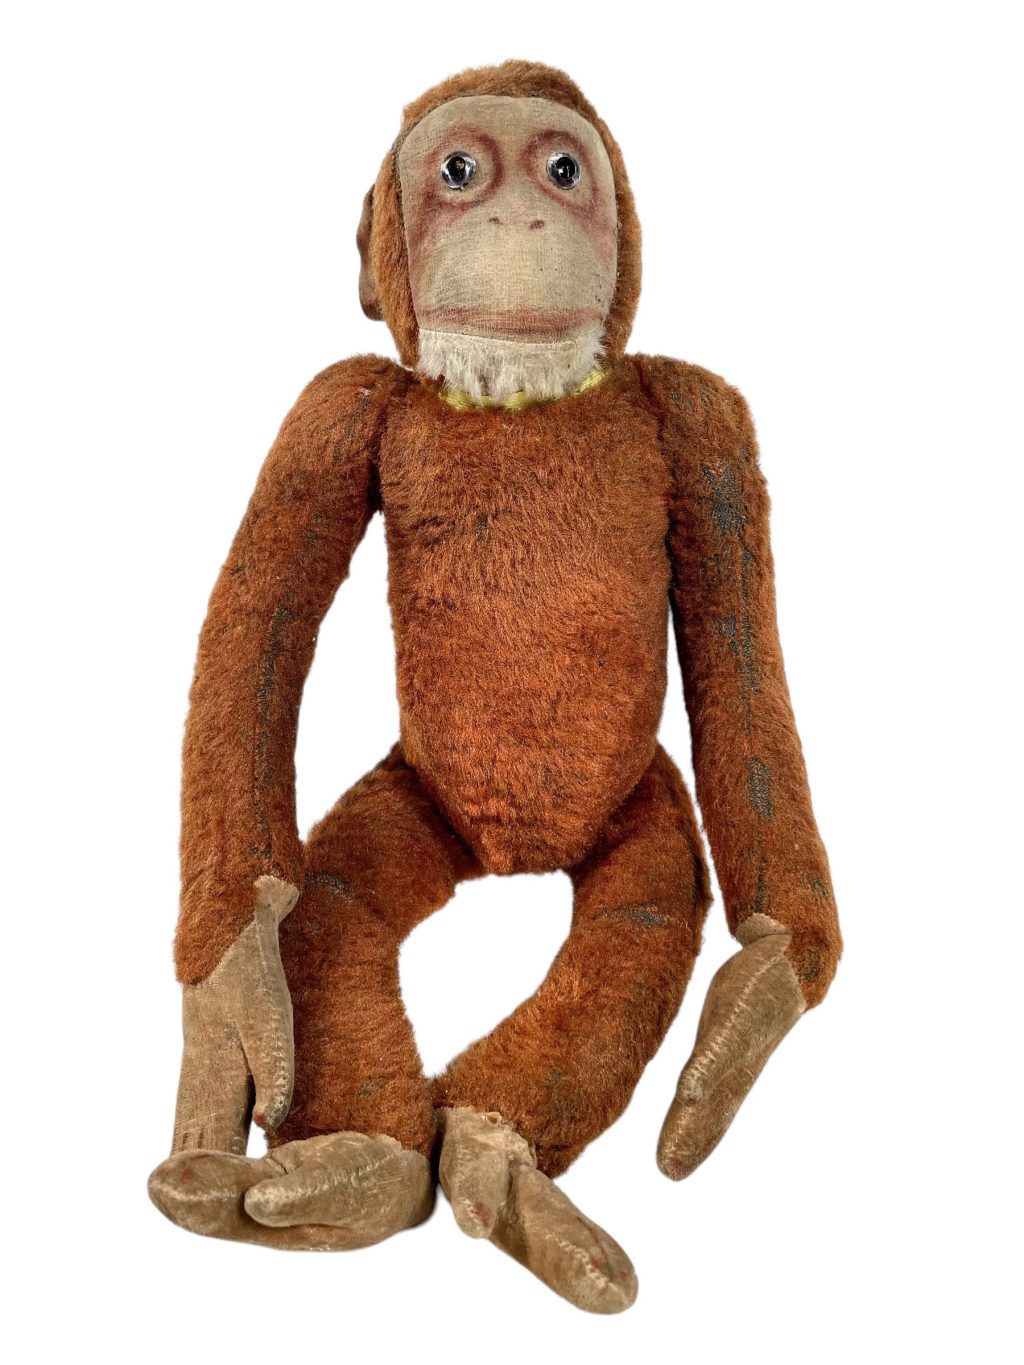 Vintage French Toy Monkey Teddy Plush Brown Toy Sawdust Stuffed circa 1920-40’s